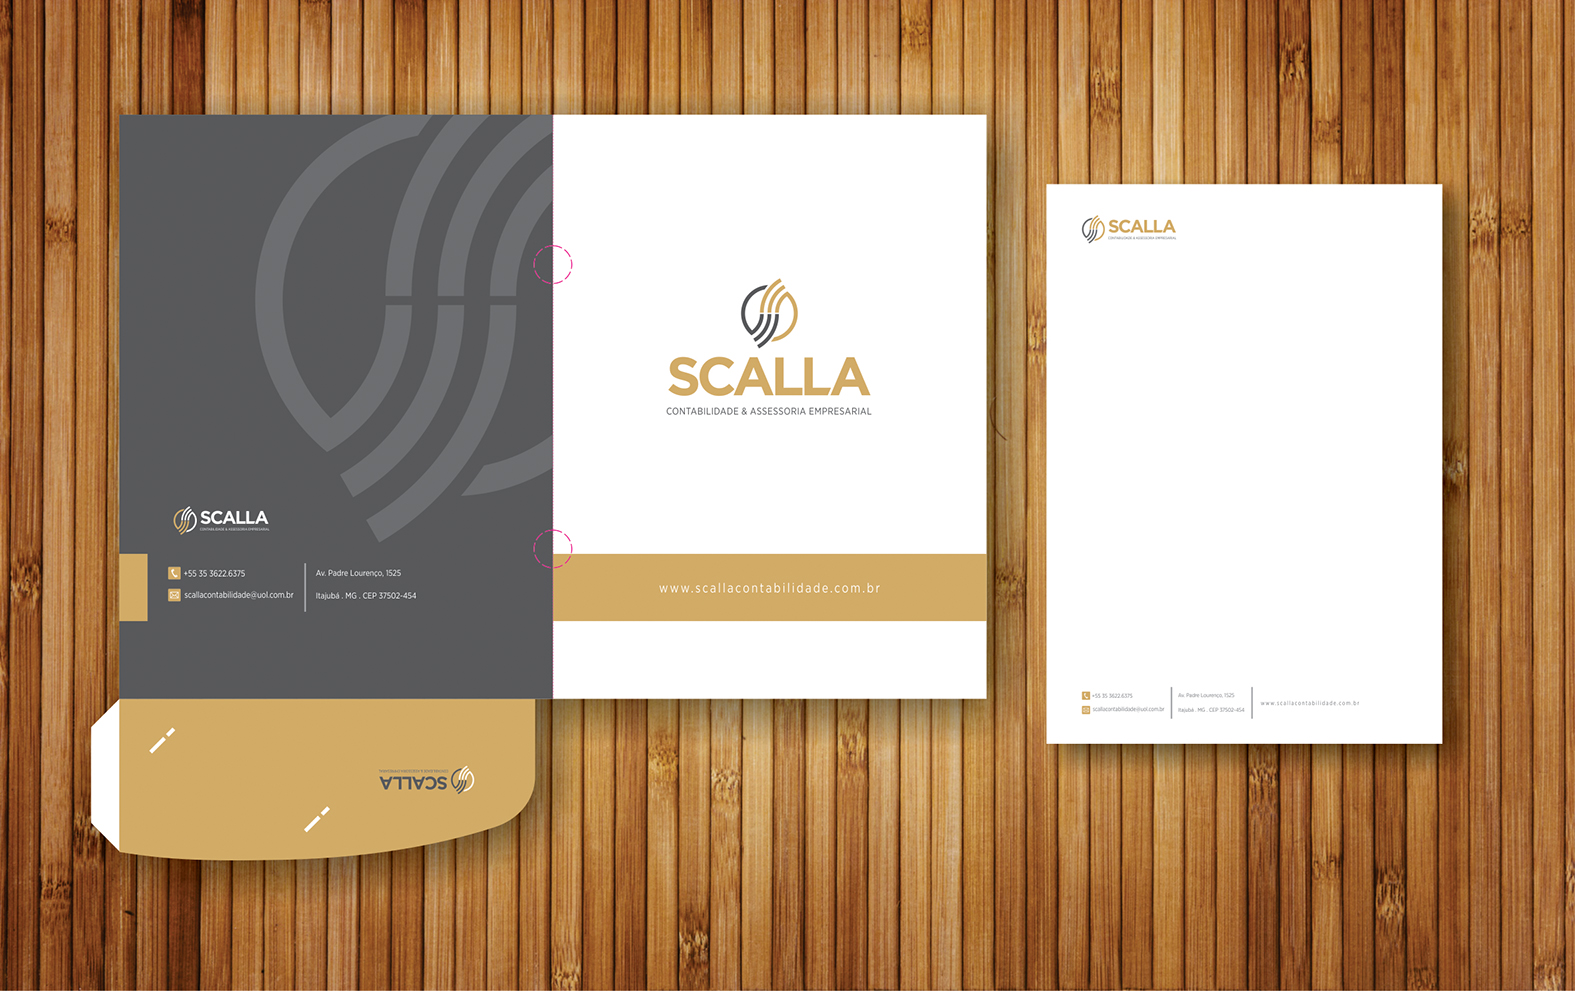 sidney_saito_scalla_papelaria_logotipo_design_visual_idendity_logo